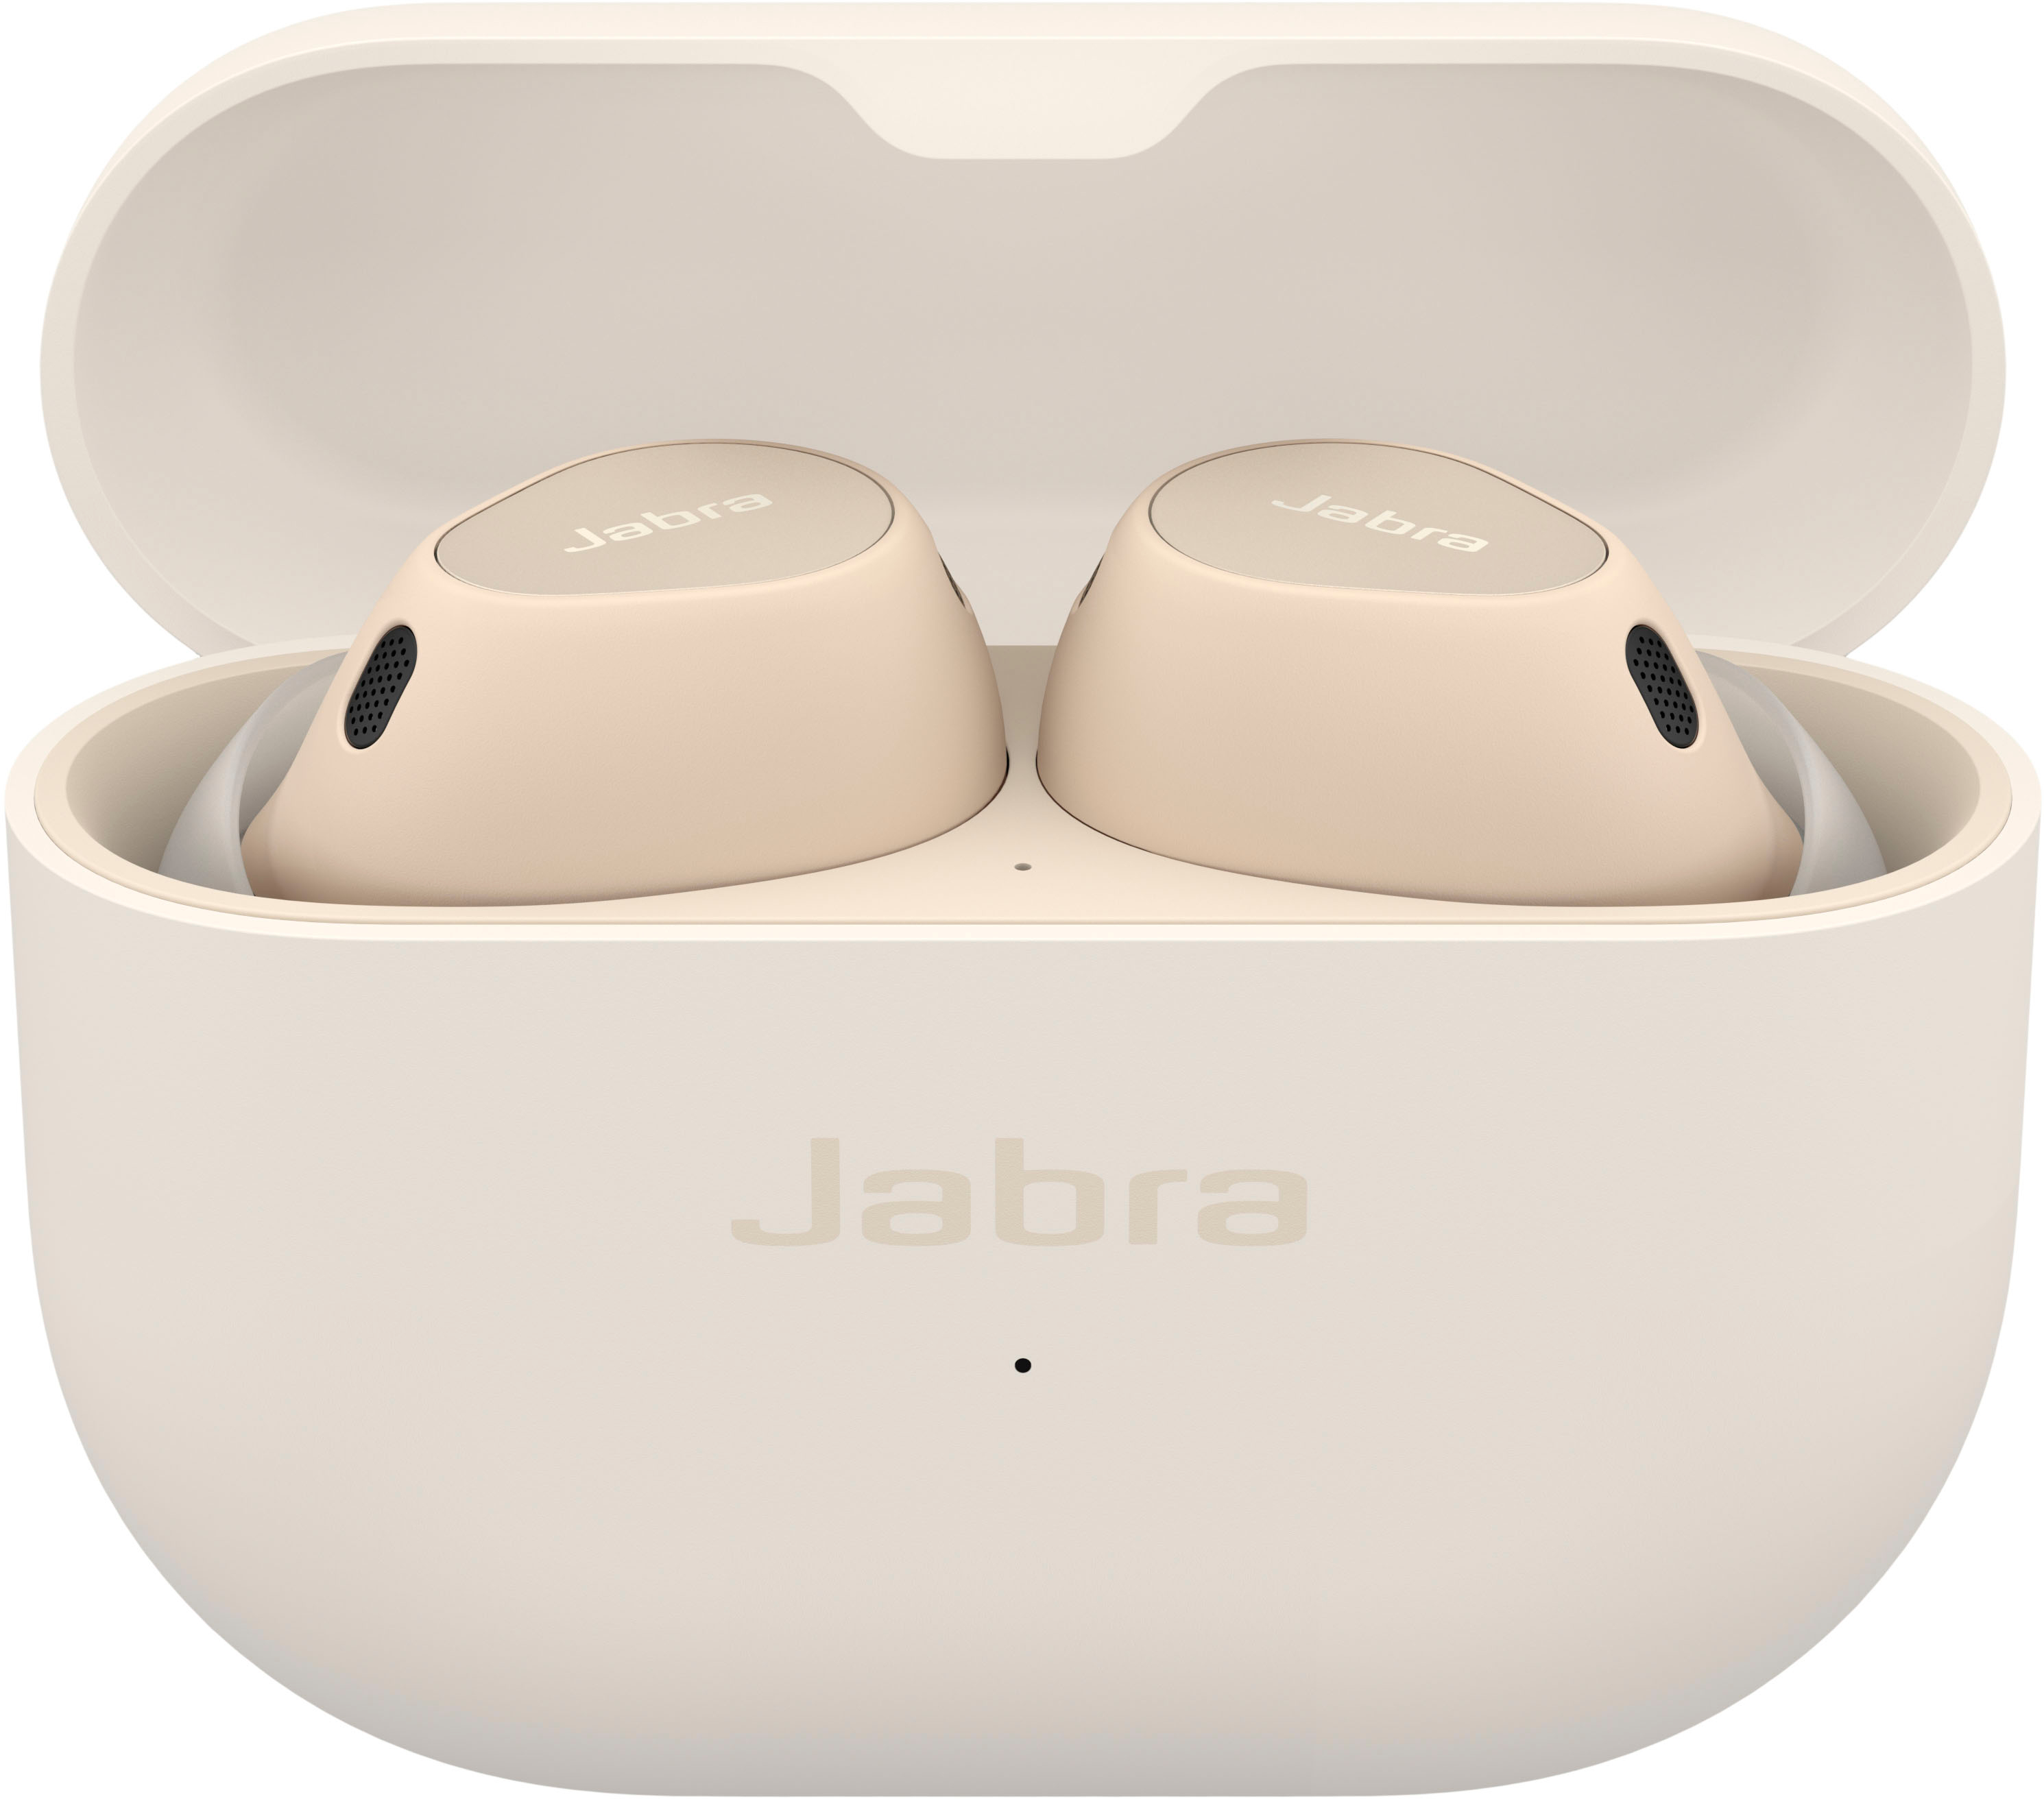 Jabra Elite - Atmos 10 100-99280901-99 Wireless Cream Best Dolby Buy True In-ear Heaphones